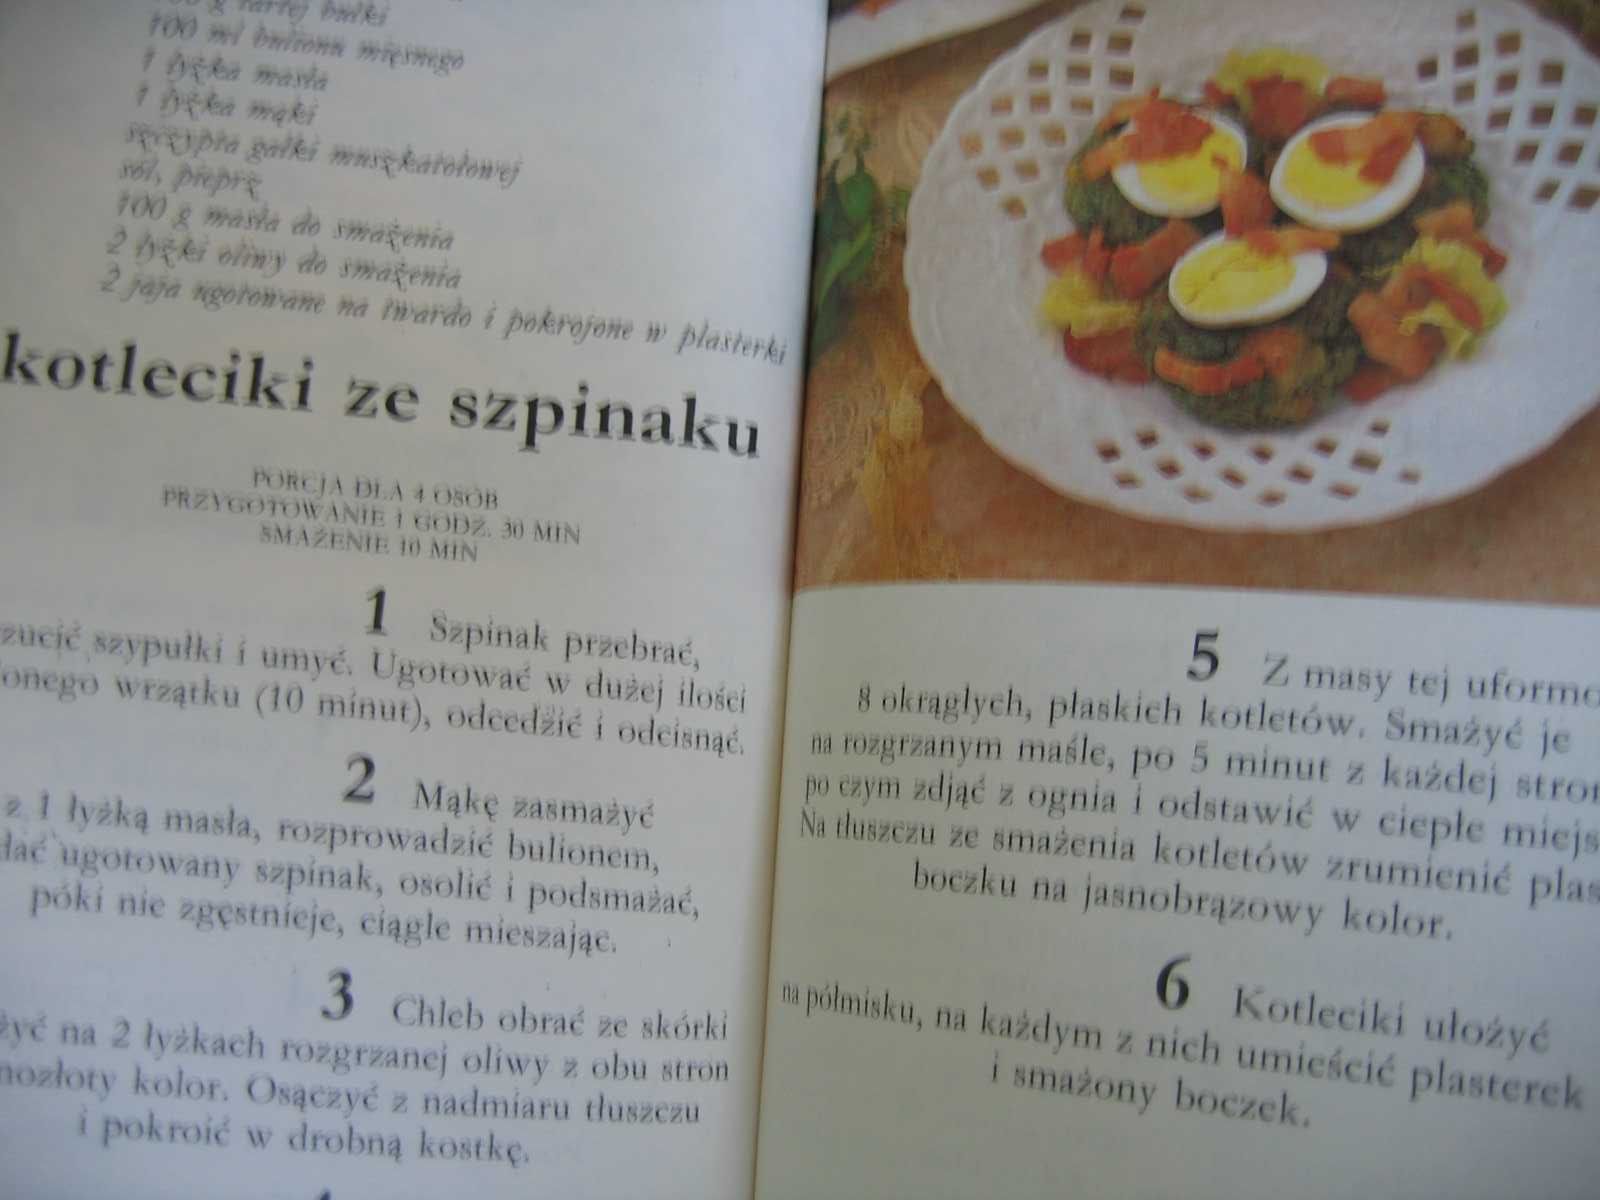 13 sztuk książek kulinarnych każda inna kuchnia ENCYKLOPEDIA KULINARNA